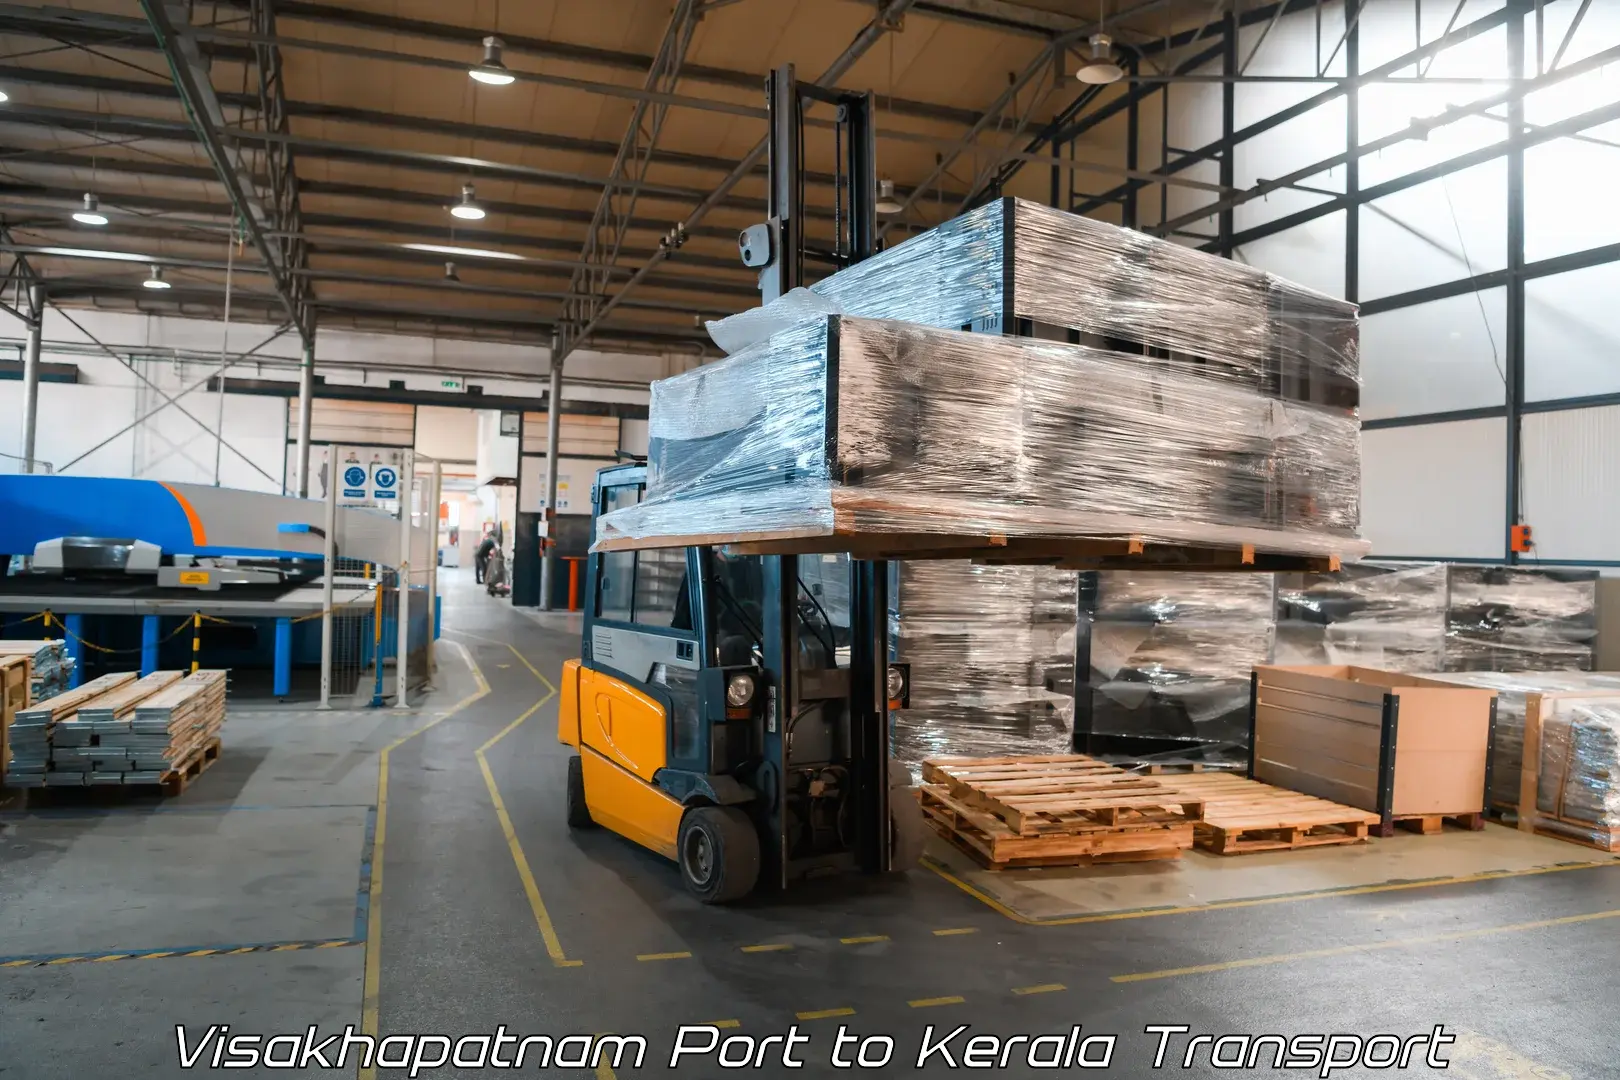 Cycle transportation service Visakhapatnam Port to Cochin Port Kochi